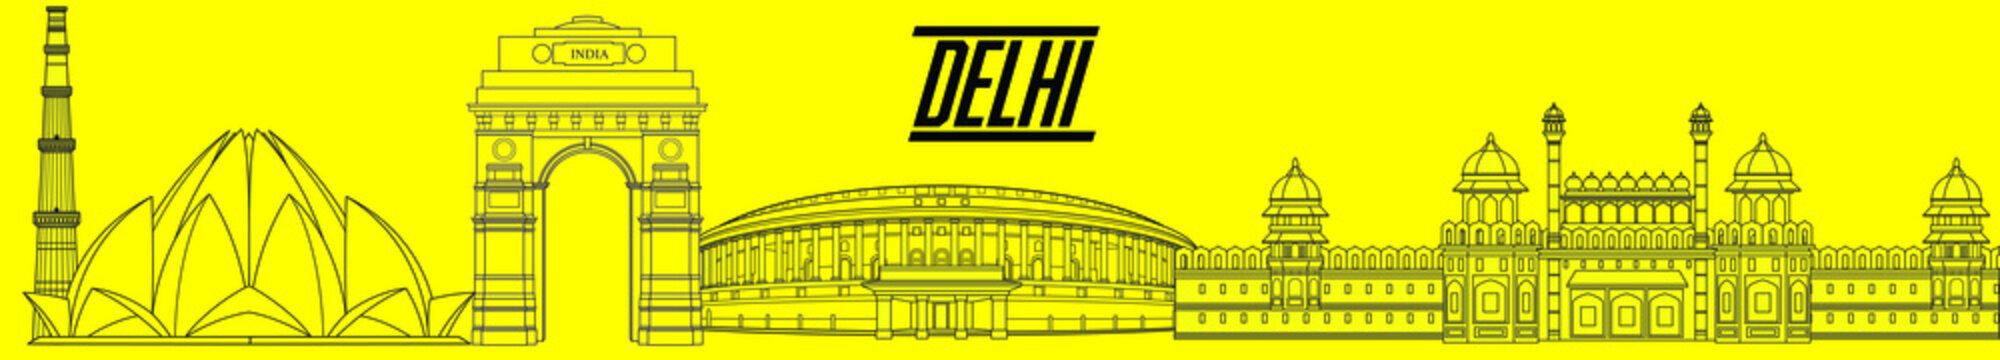 Delhi skyline, New Delhi city, Line Art Vector illustration with all famous buildings, New Delhi buildings set, panoramic view